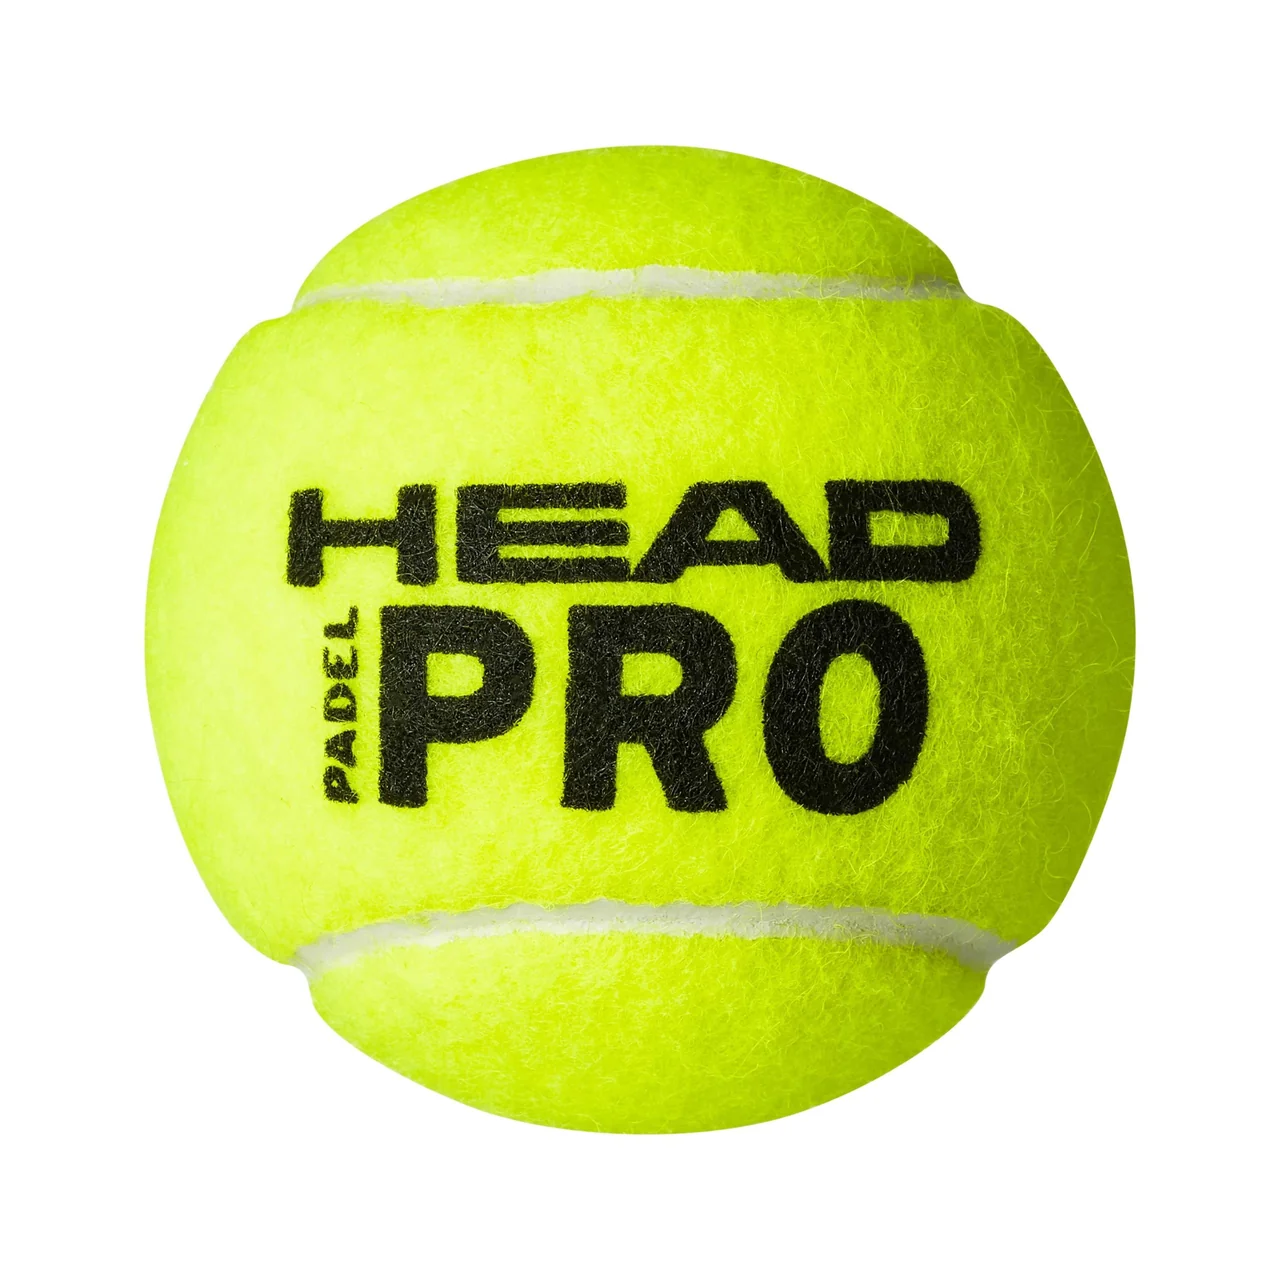 Head Padel Pro Ball - 3 tubes